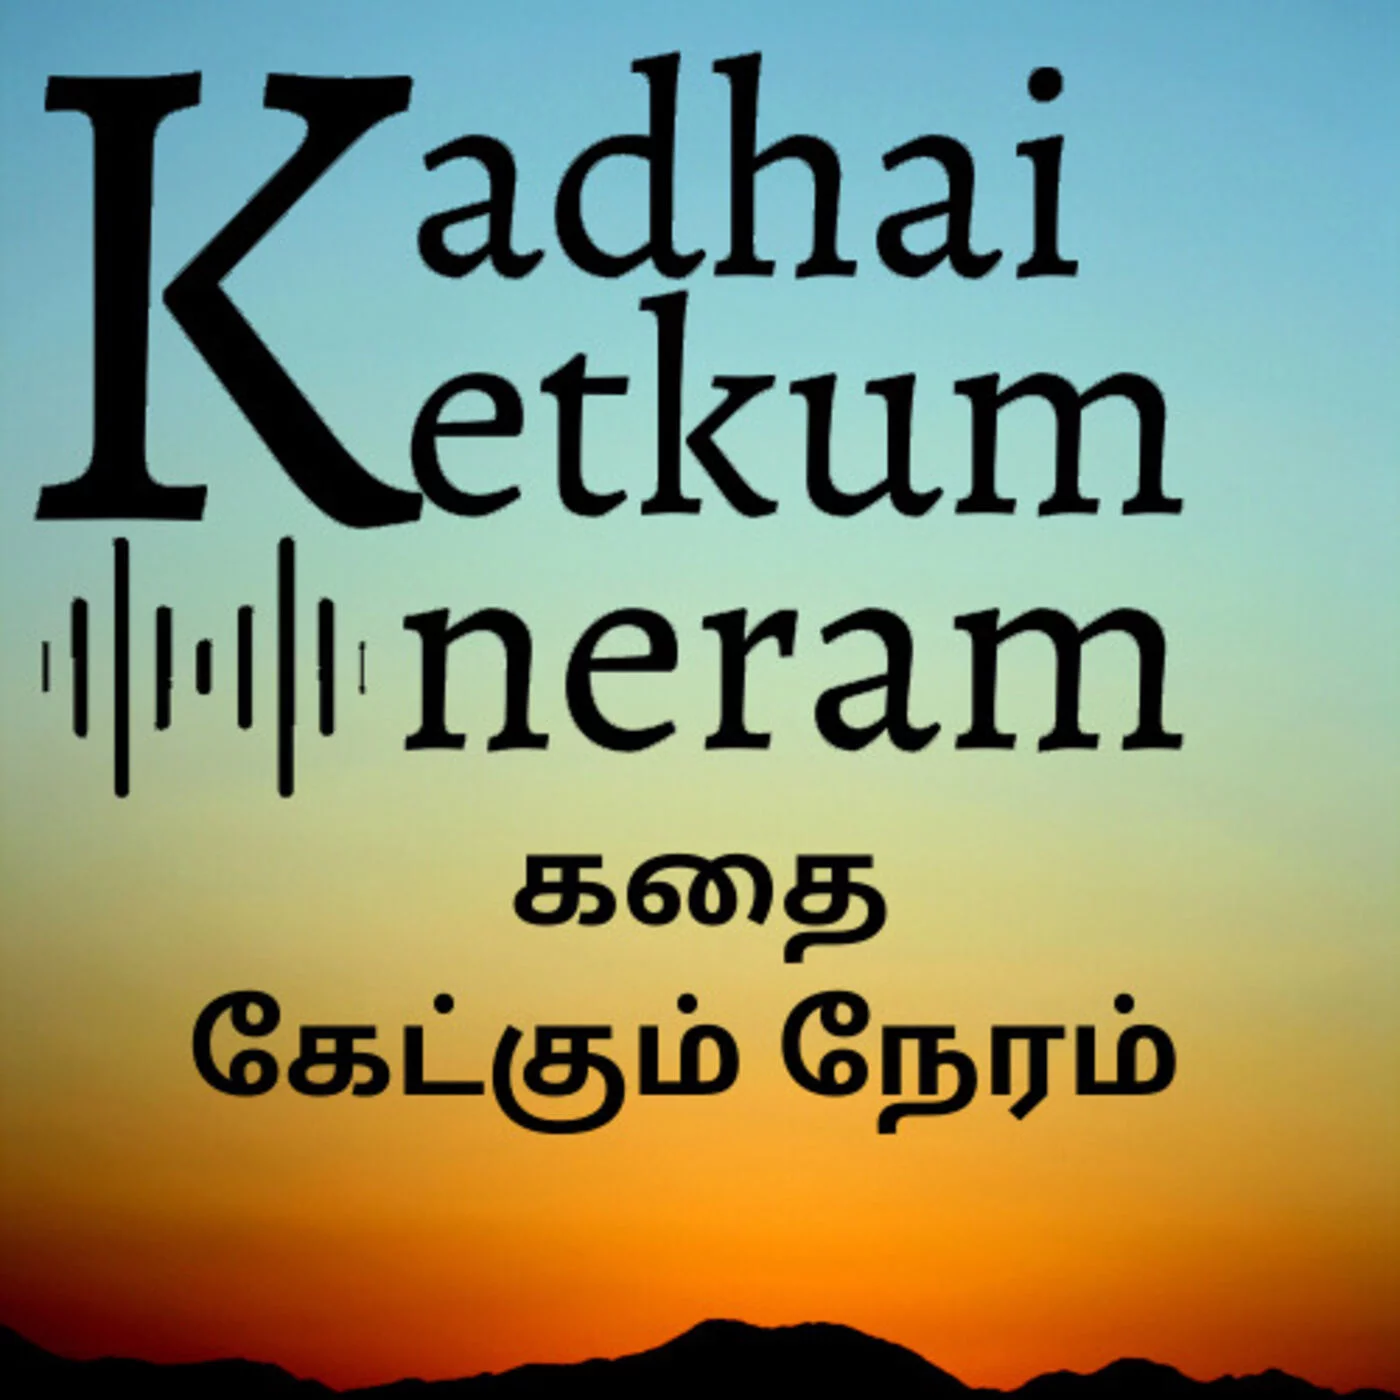 Kadhai Ketkum Neram- Tamil Audio Stories in Telugu | తెలుగు | KUKUFM